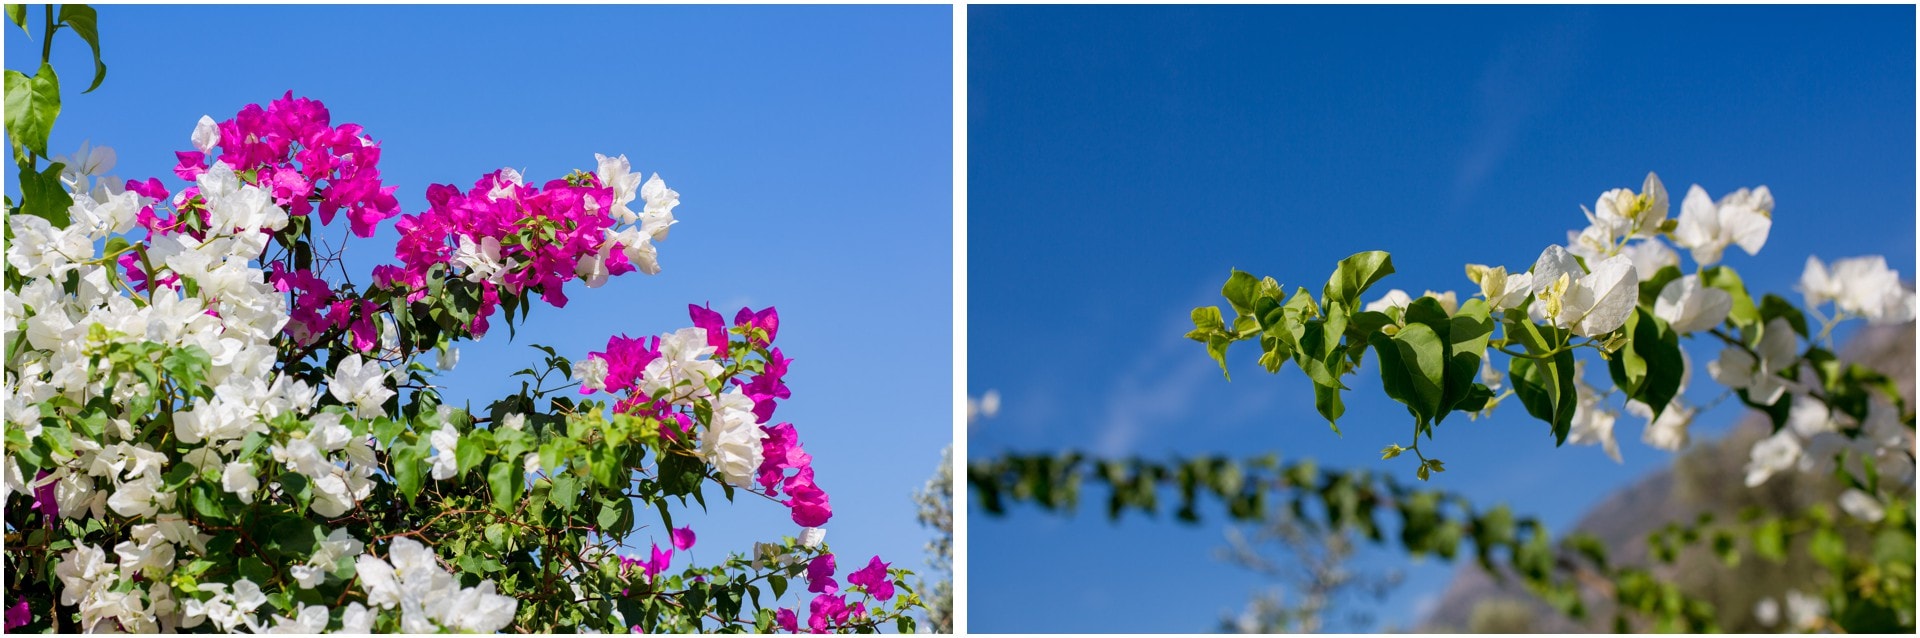 flowers against a blue sky